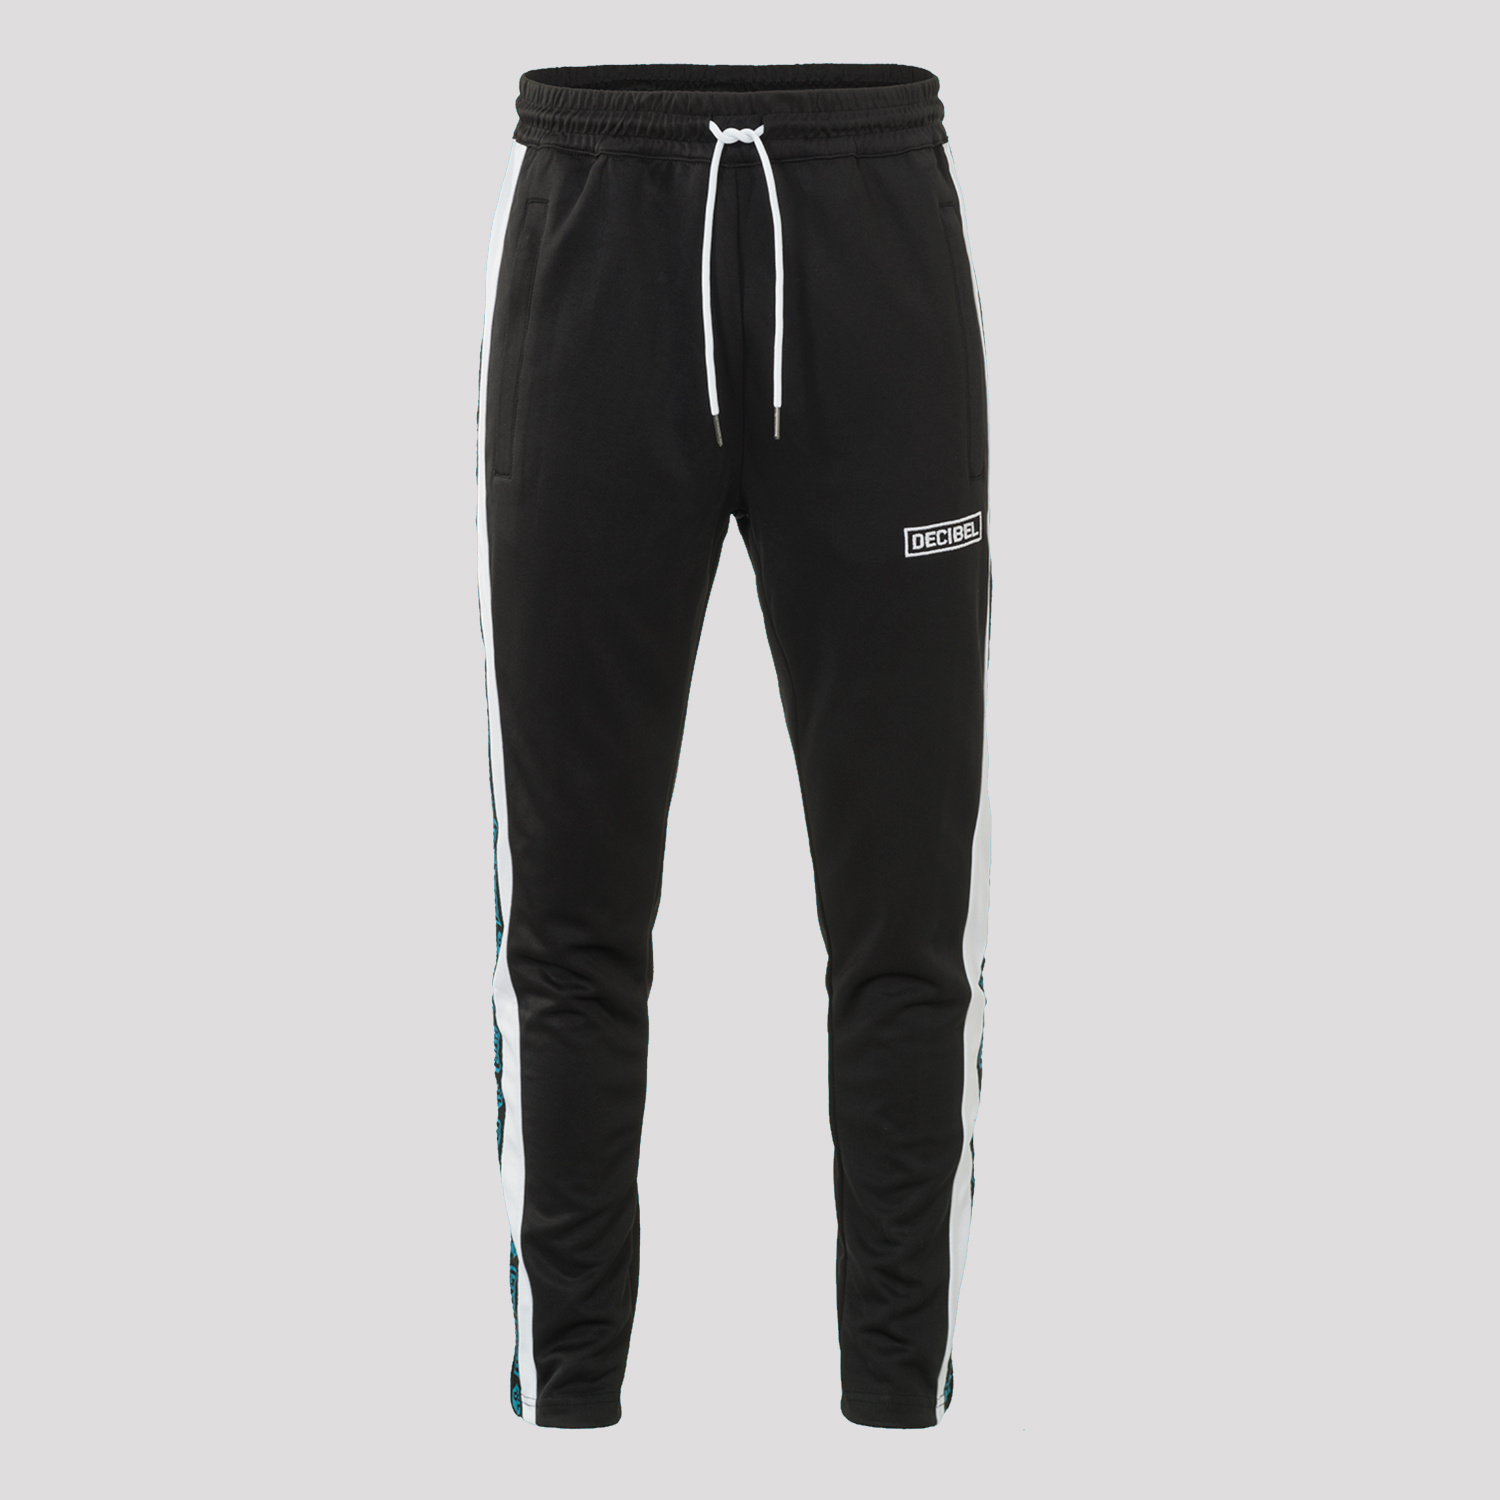 Decibel track pants black/white